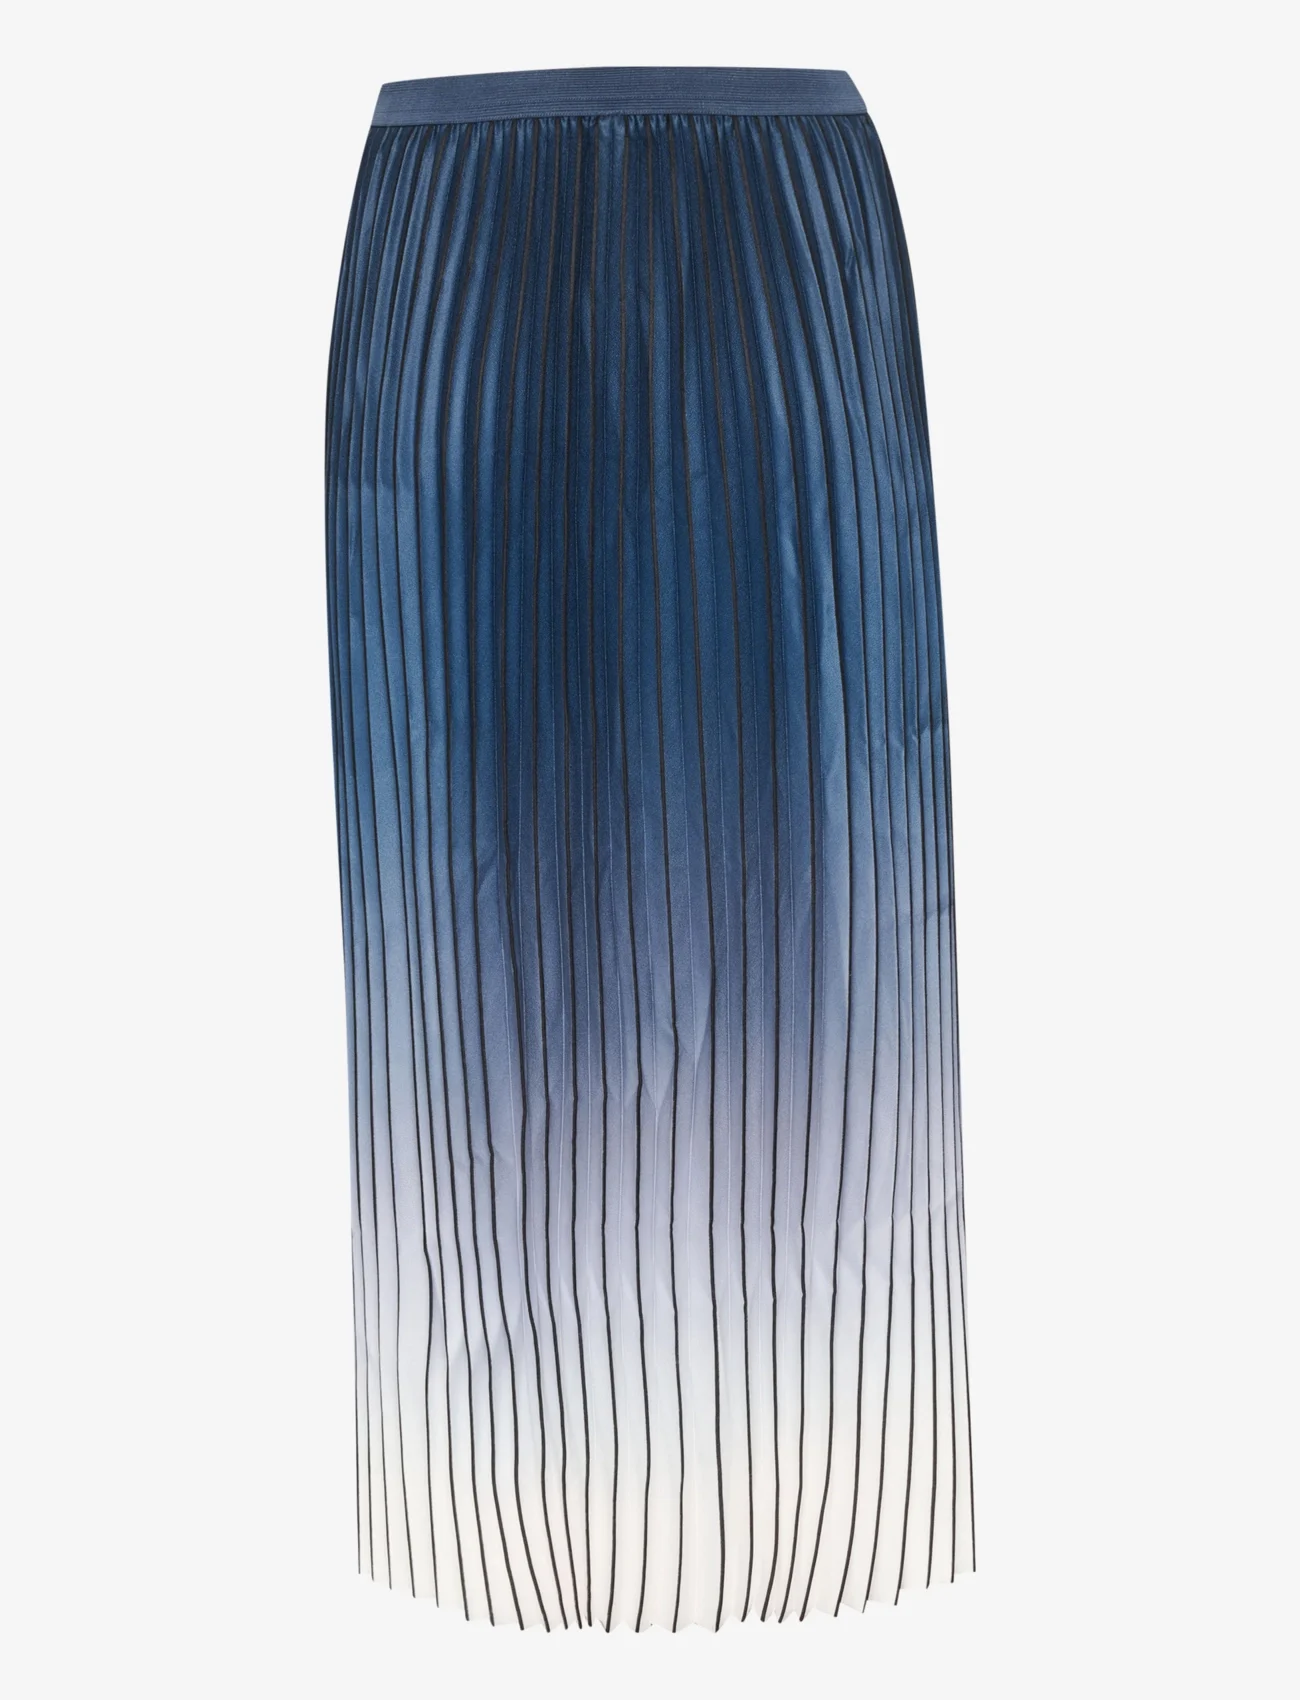 Culture - CUscarlett Ombre Skirt - plisowane spódnice - dress blues - 1